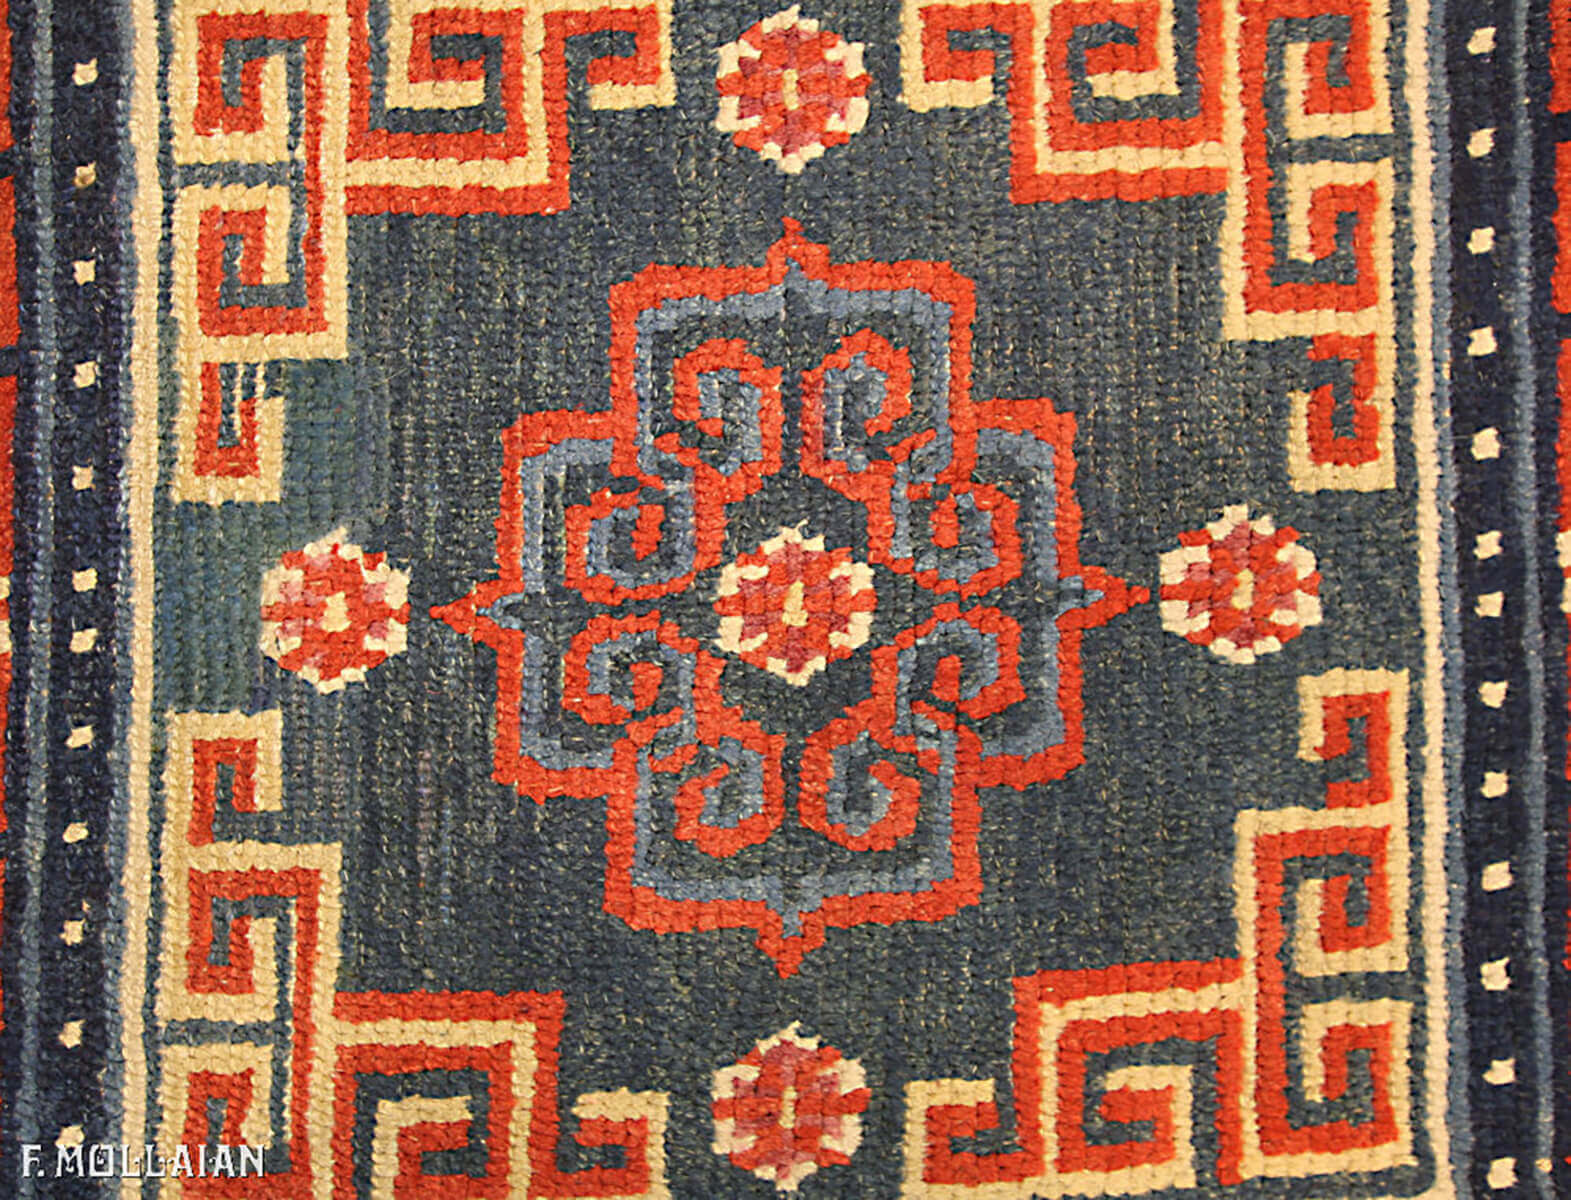 Antique Tibetan Rug n°:12373498